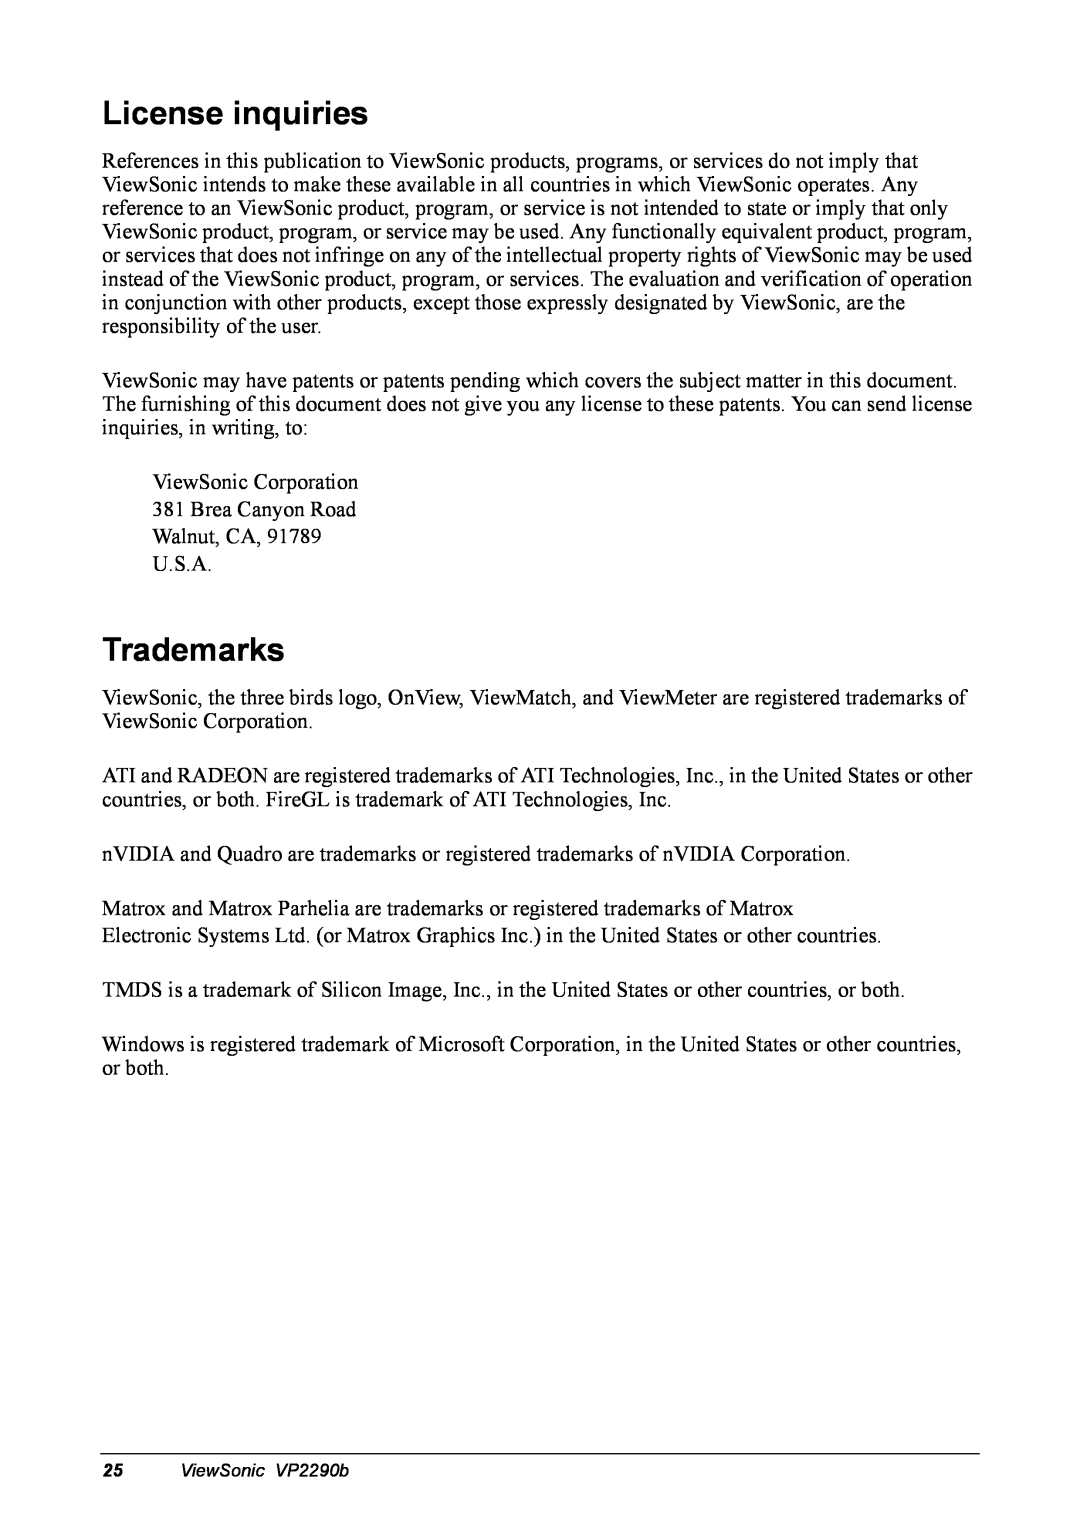 ViewSonic VP2290B manual License inquiries, Trademarks 